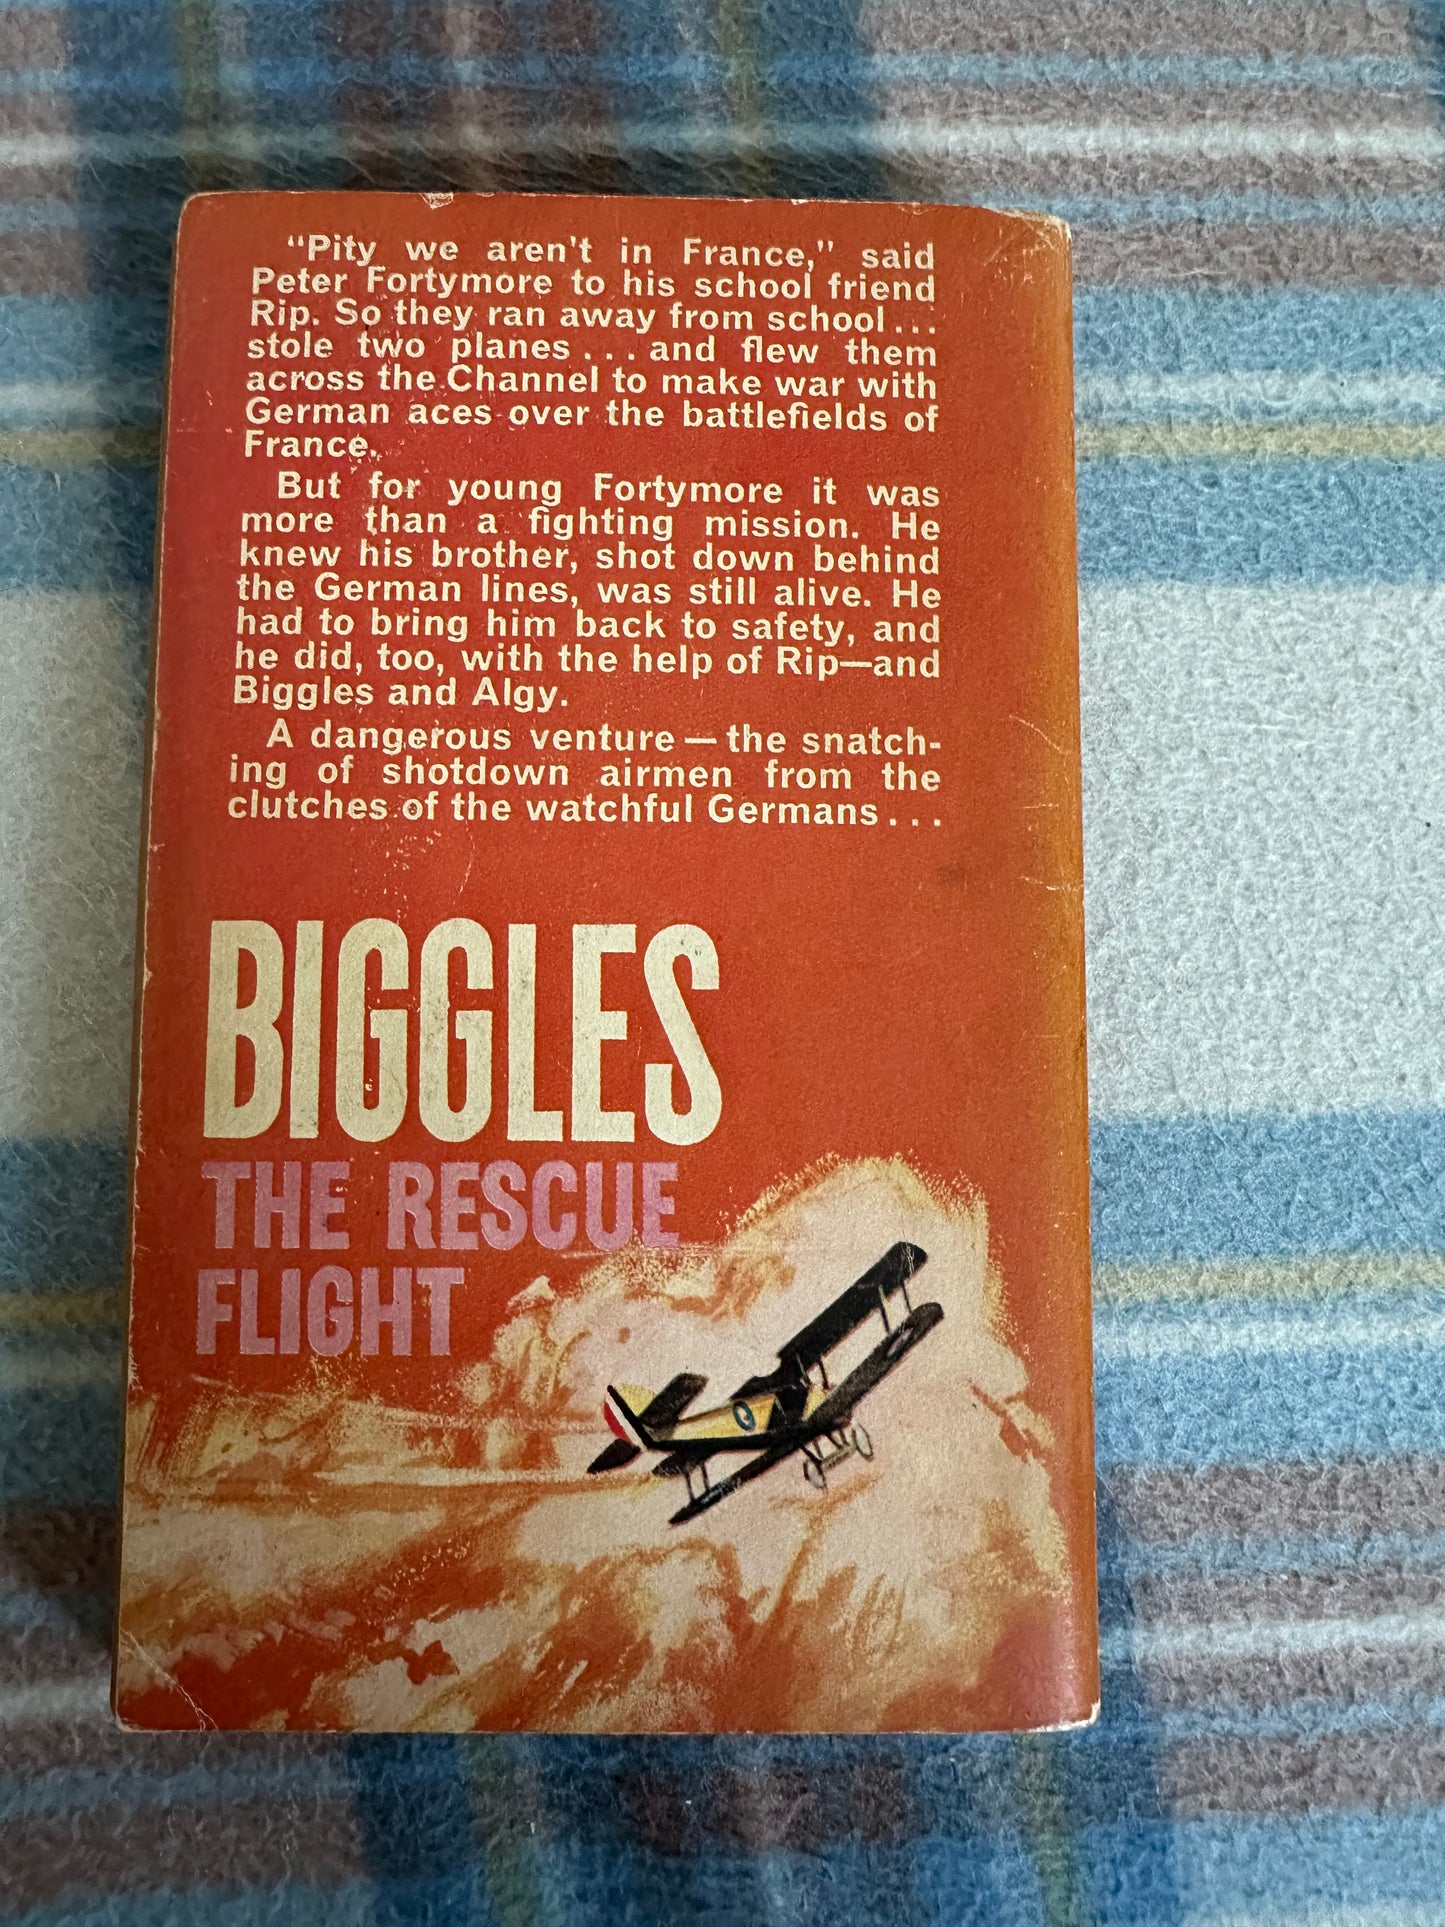 1965 Biggles The Rescue Flight - Capt. W.E. Johns(Armada paperbacks)